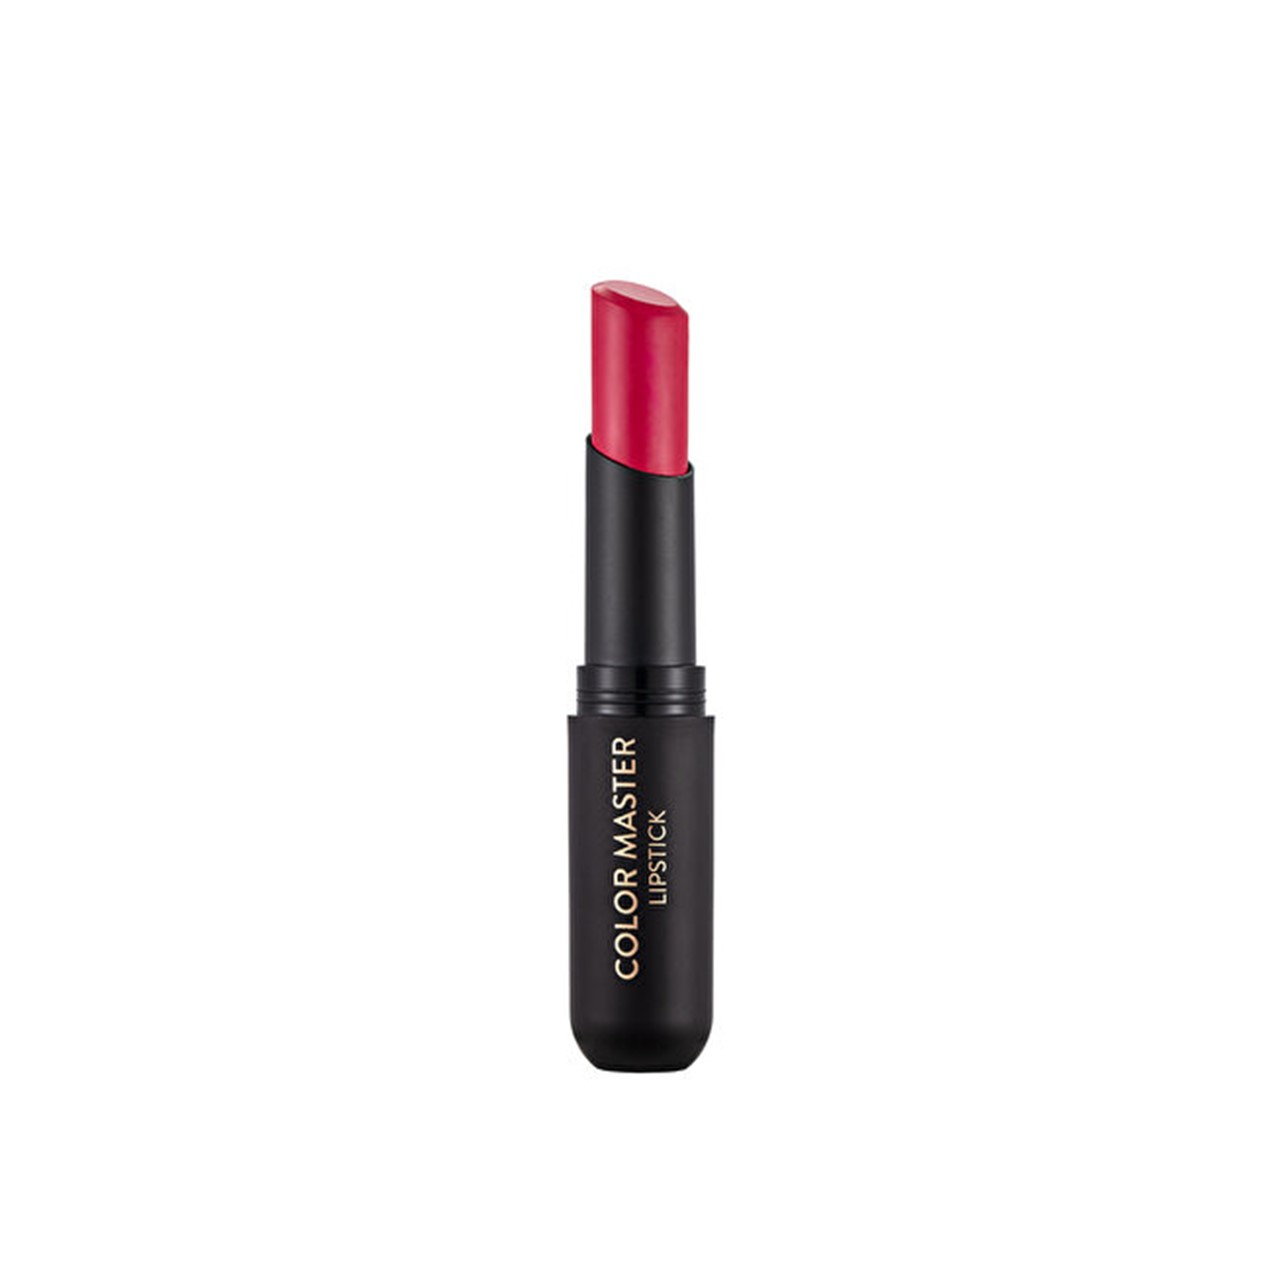 Flormar Color Master Lipstick 08 Fuchsia 3g (0.11oz)